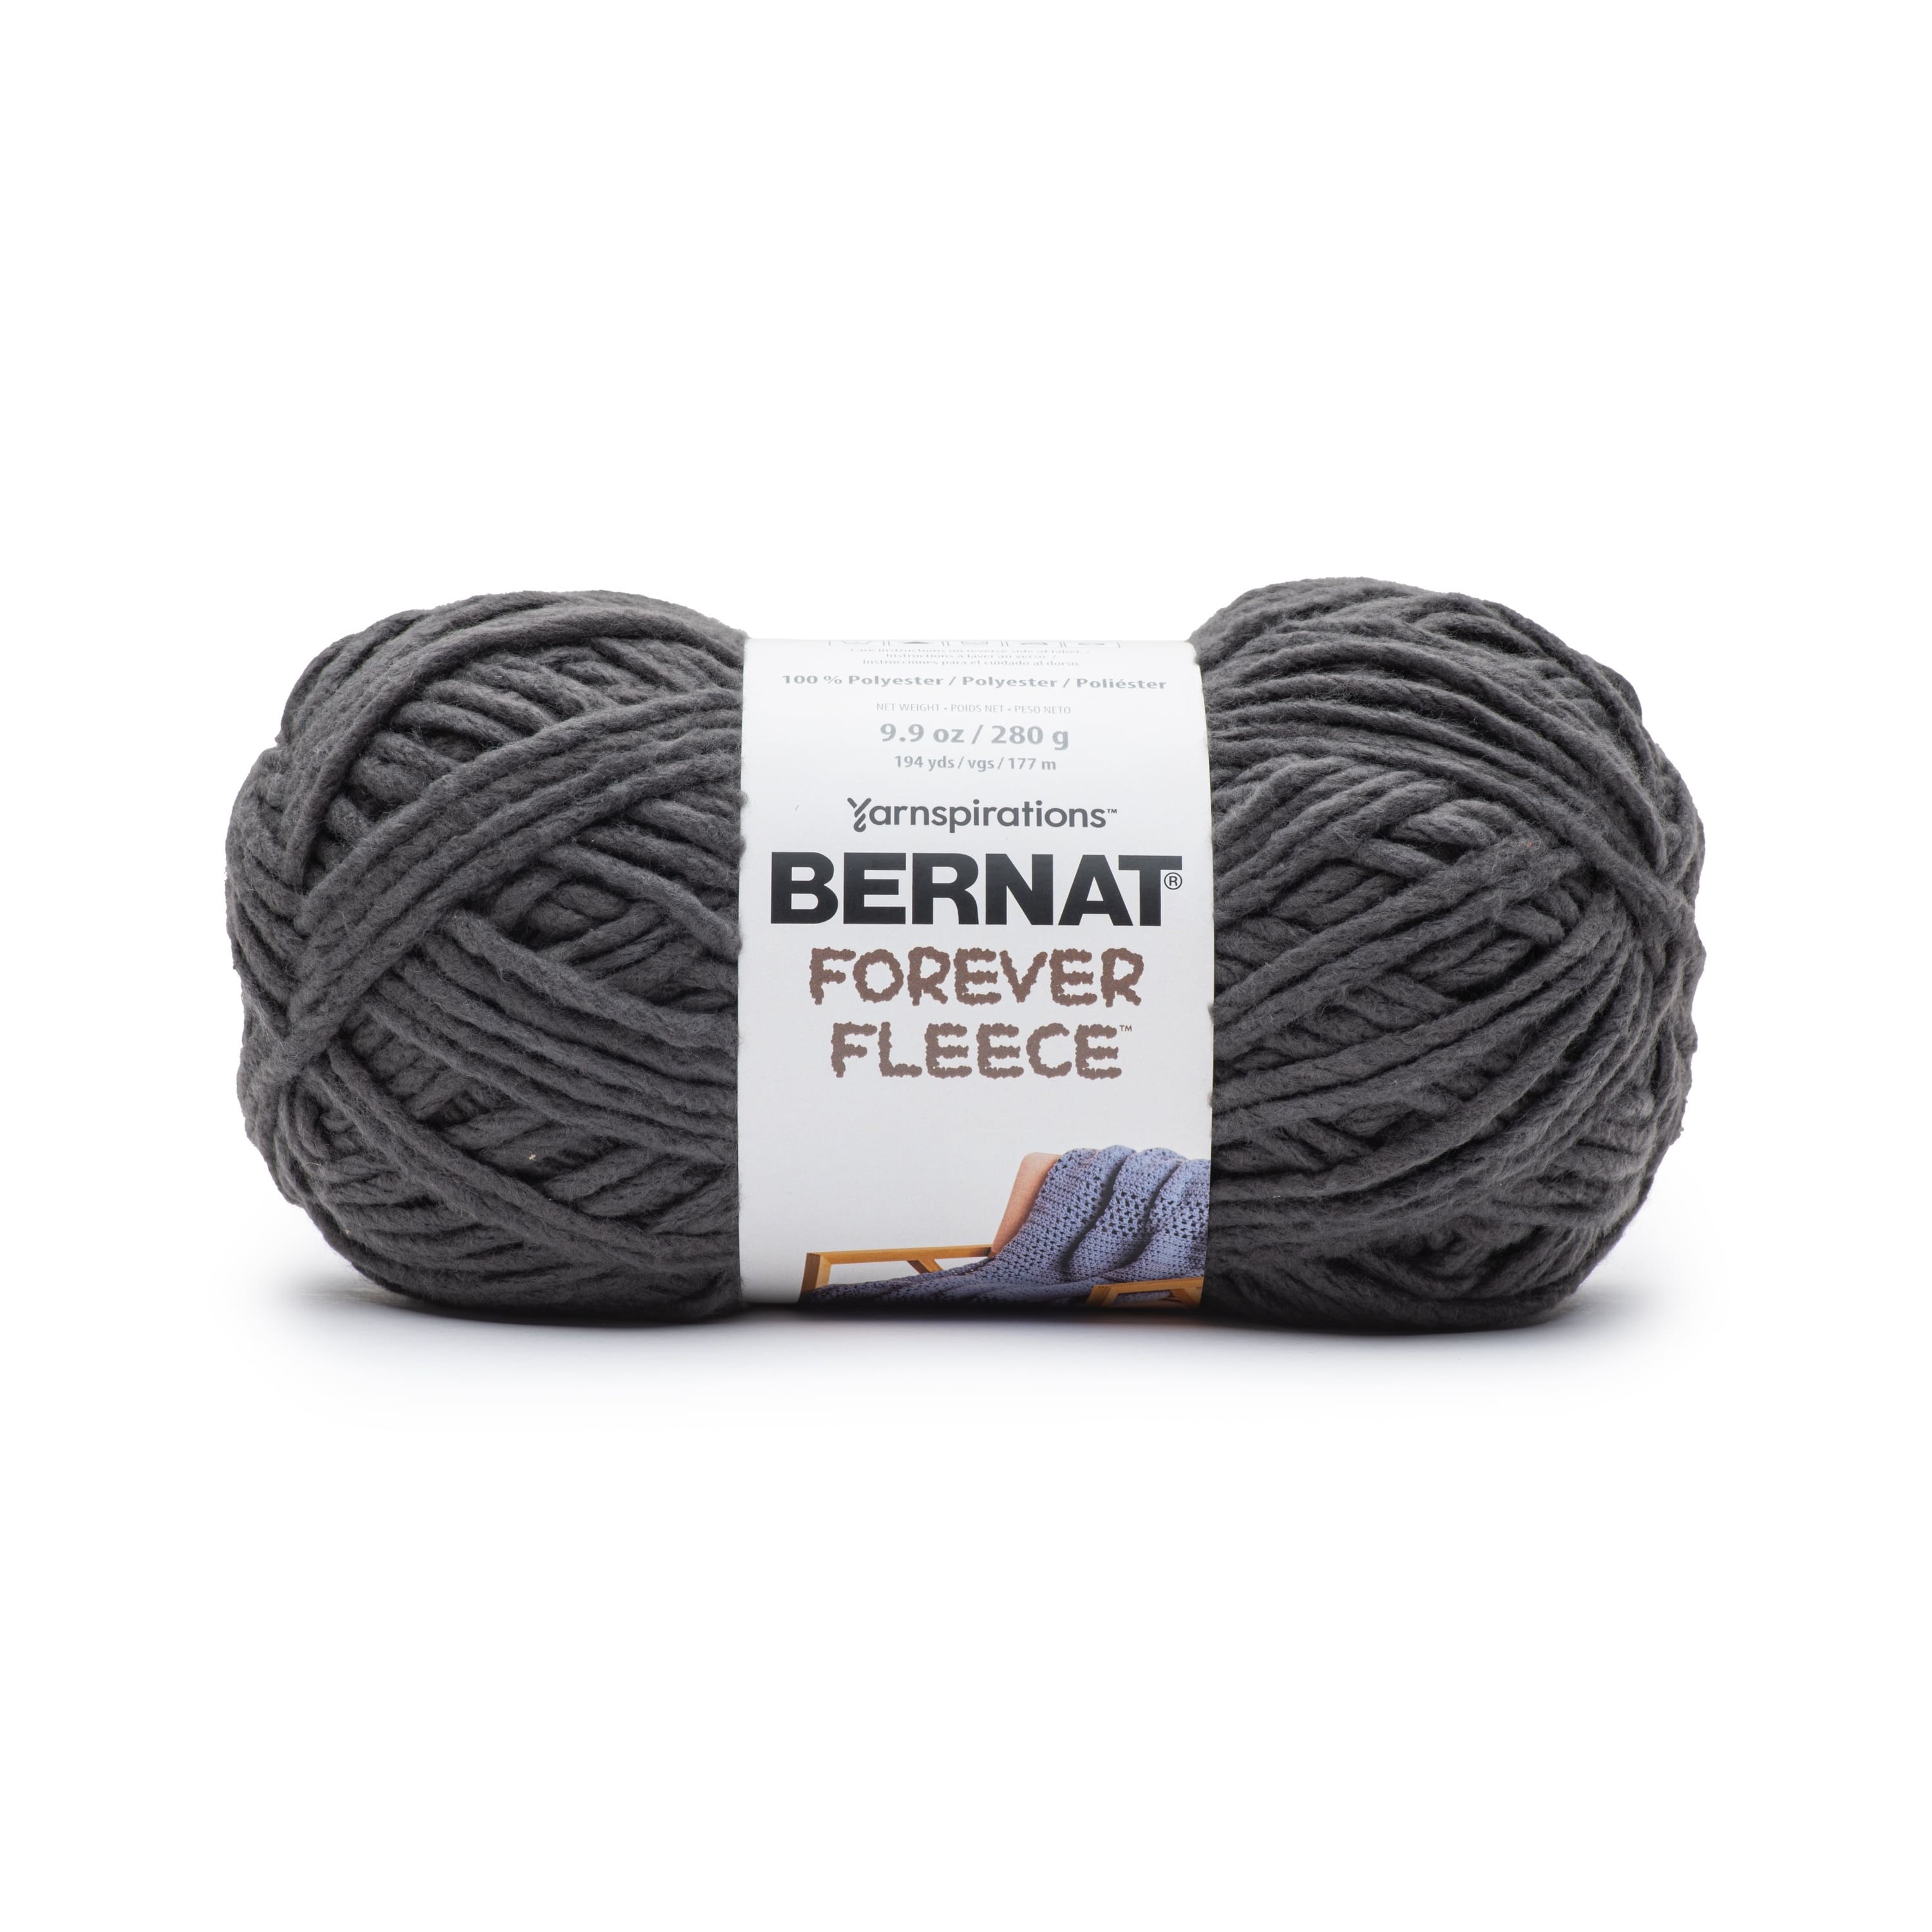 Bernat Forever Fleece Yarn-Peppermint, 1 count - Kroger